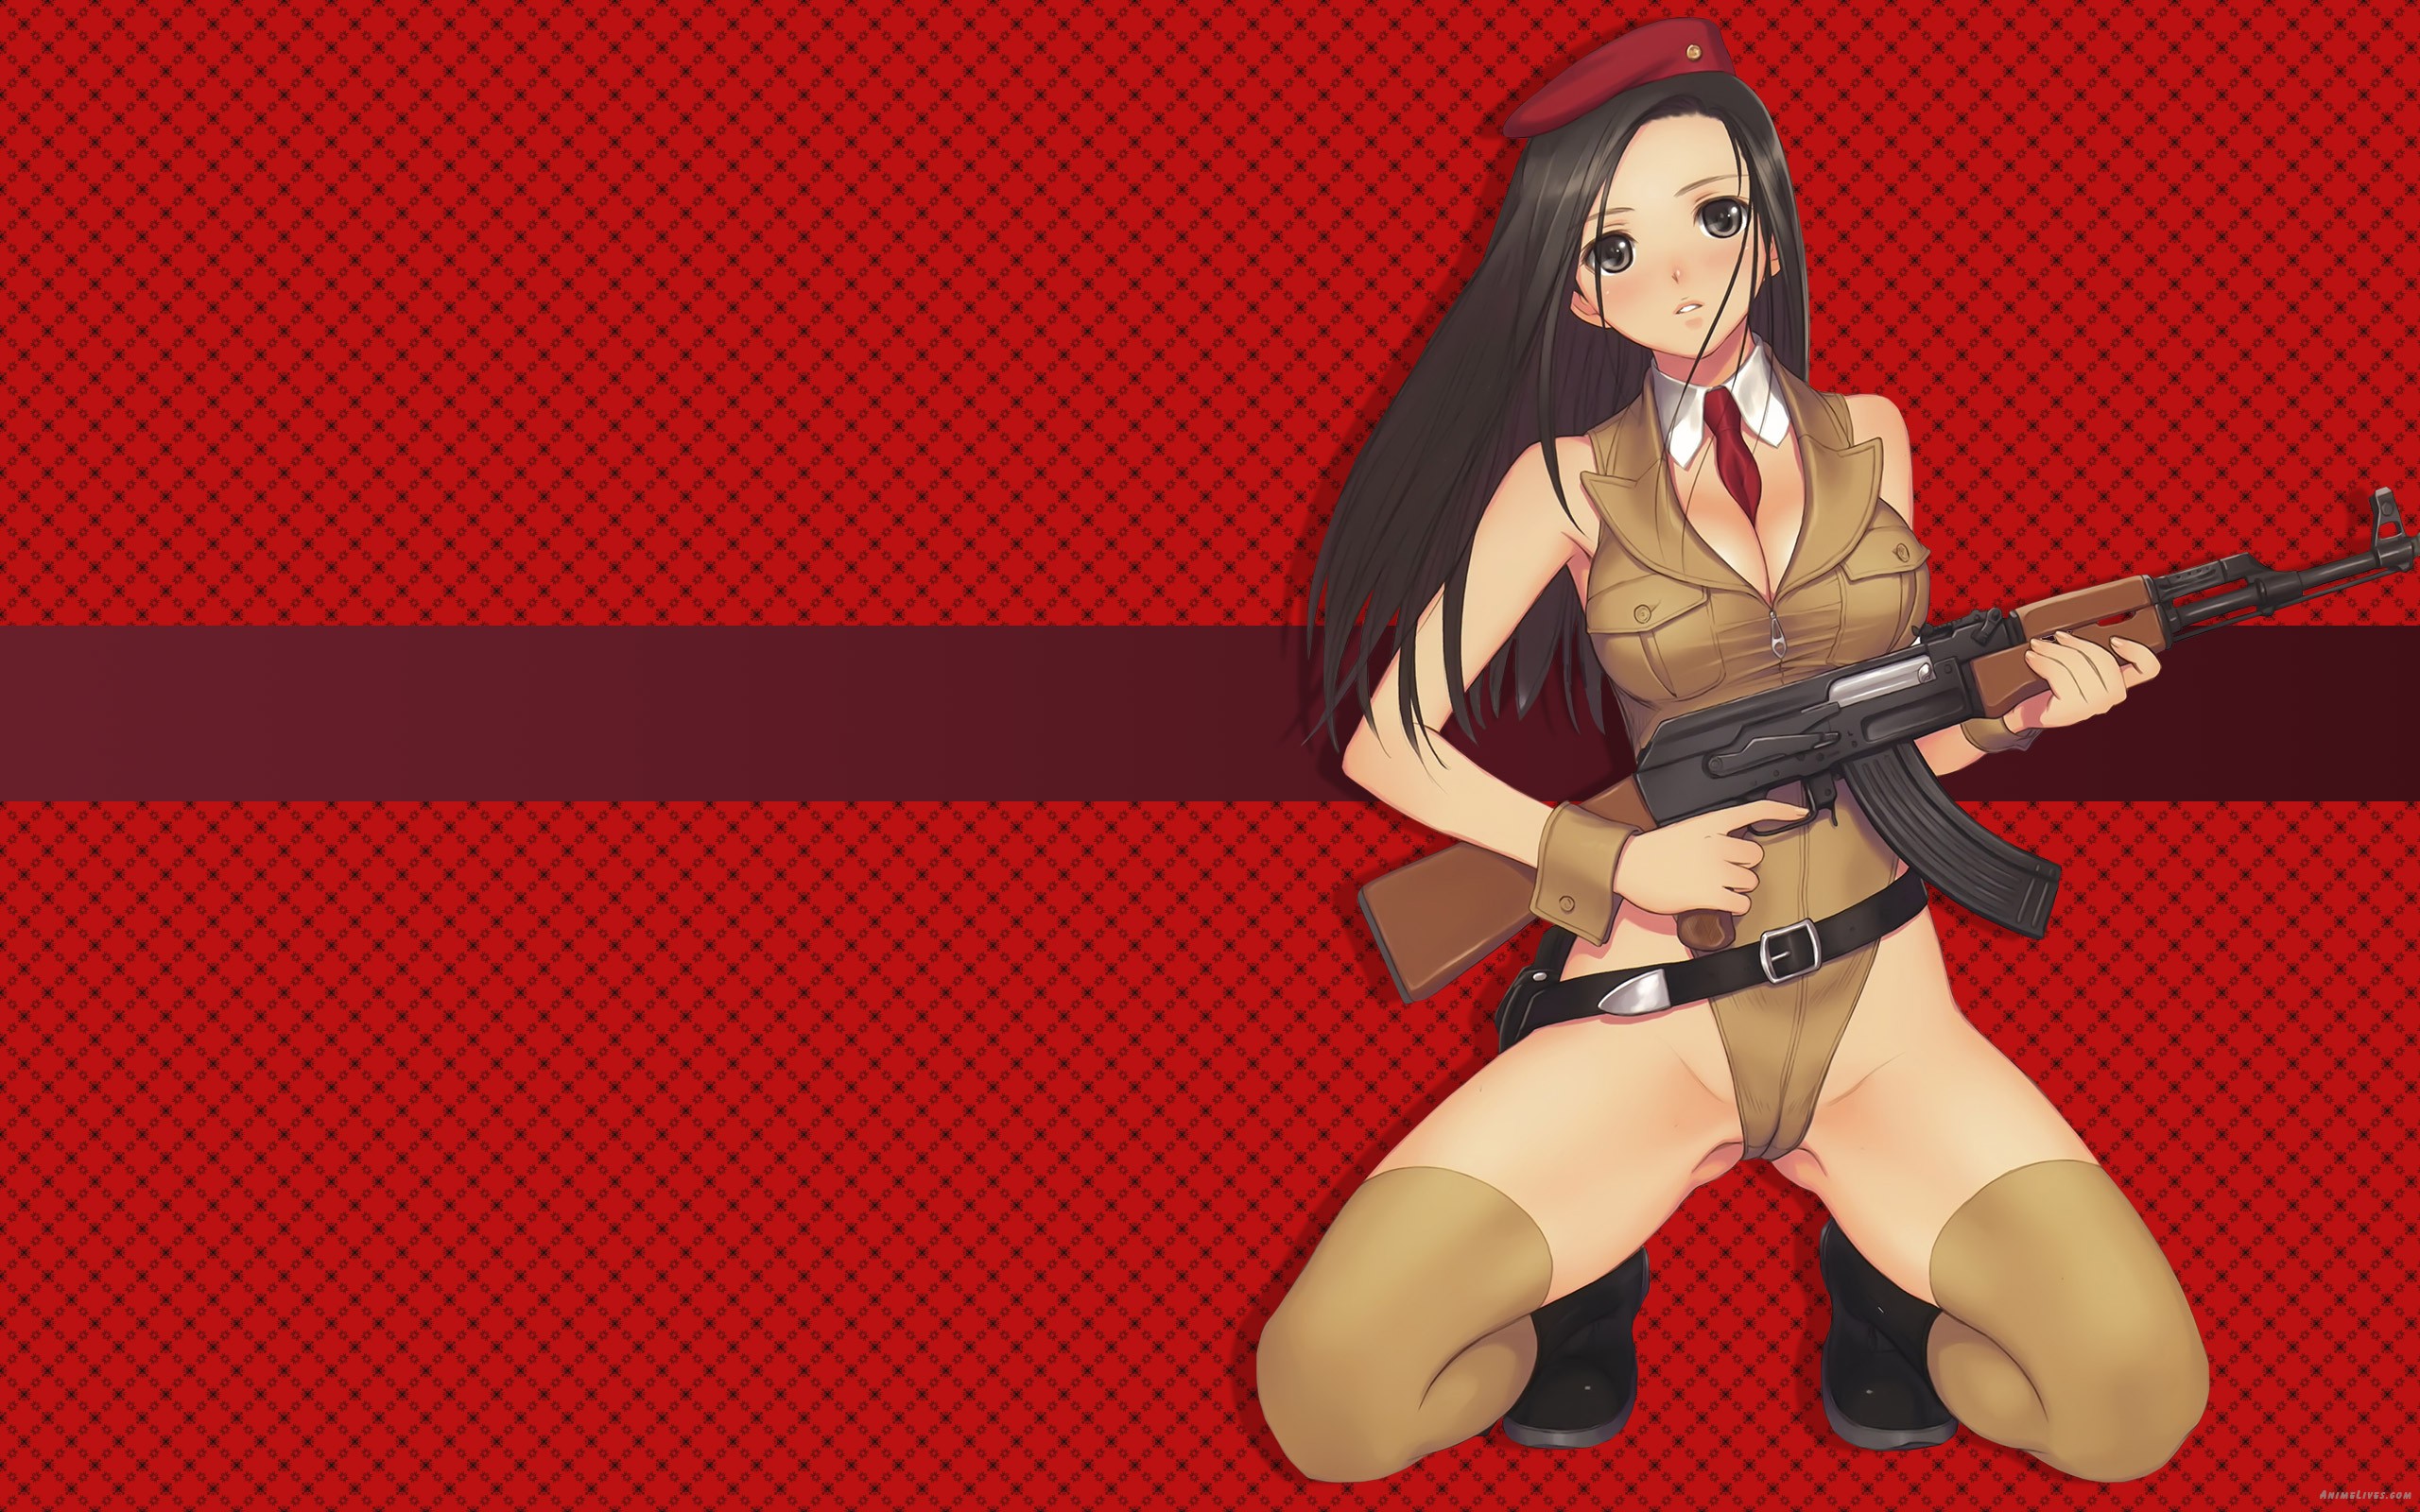 Anime 2560x1600 anime girls anime weapon girls with guns red background machine gun AK-47 dark hair hat women with hats dark eyes boobs cleavage kneeling bodysuit looking at viewer